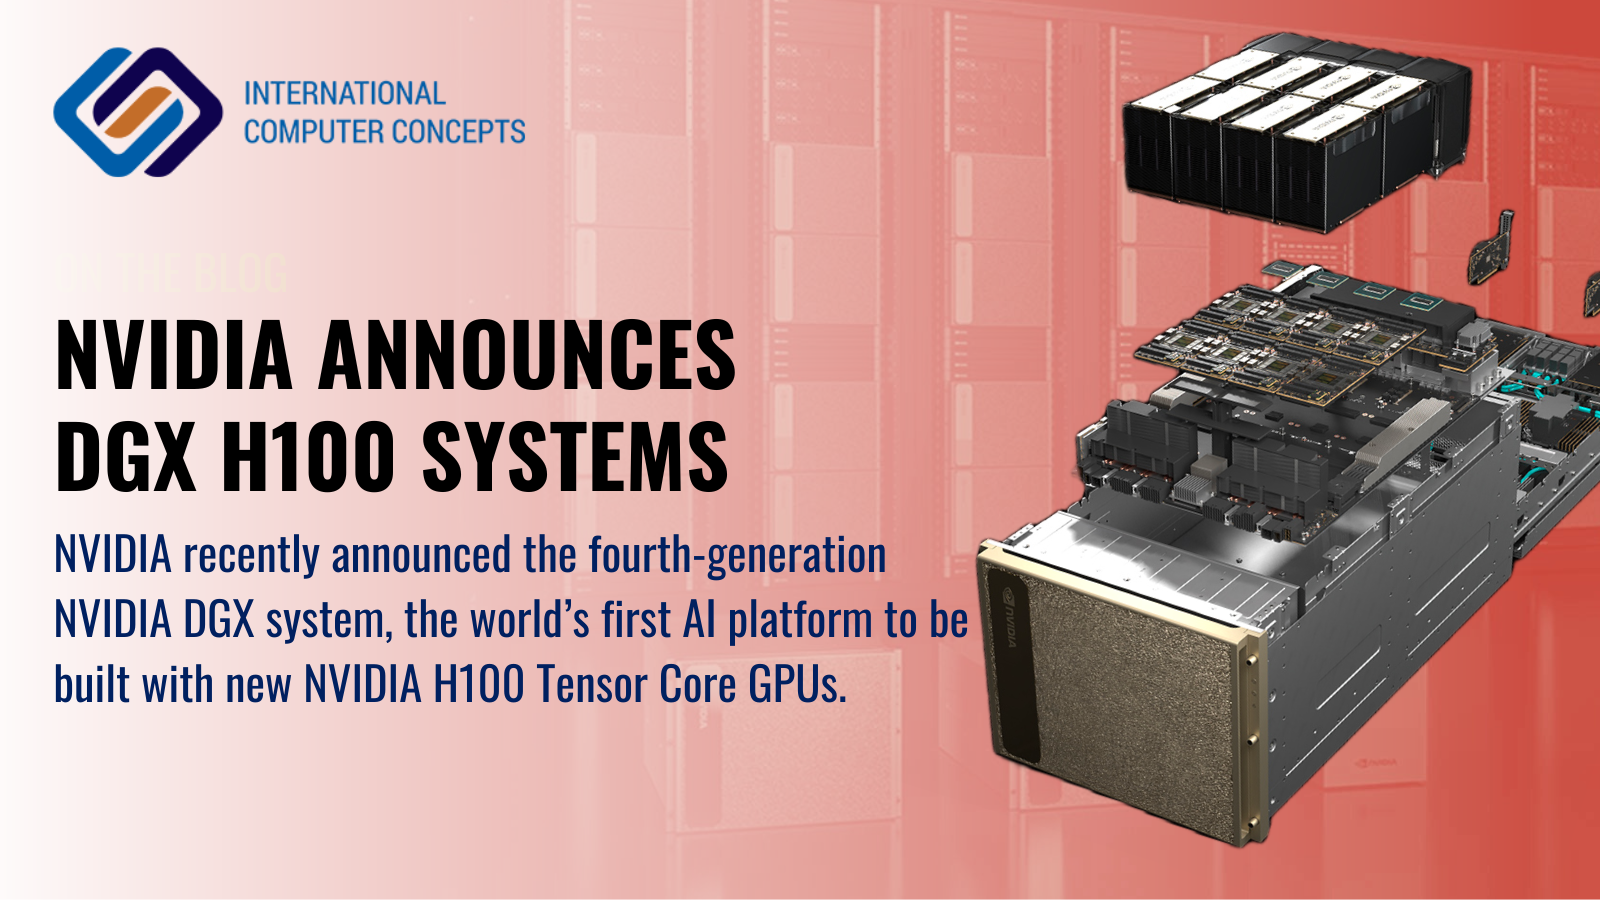 NVIDIA Announces DGX H100 Systems